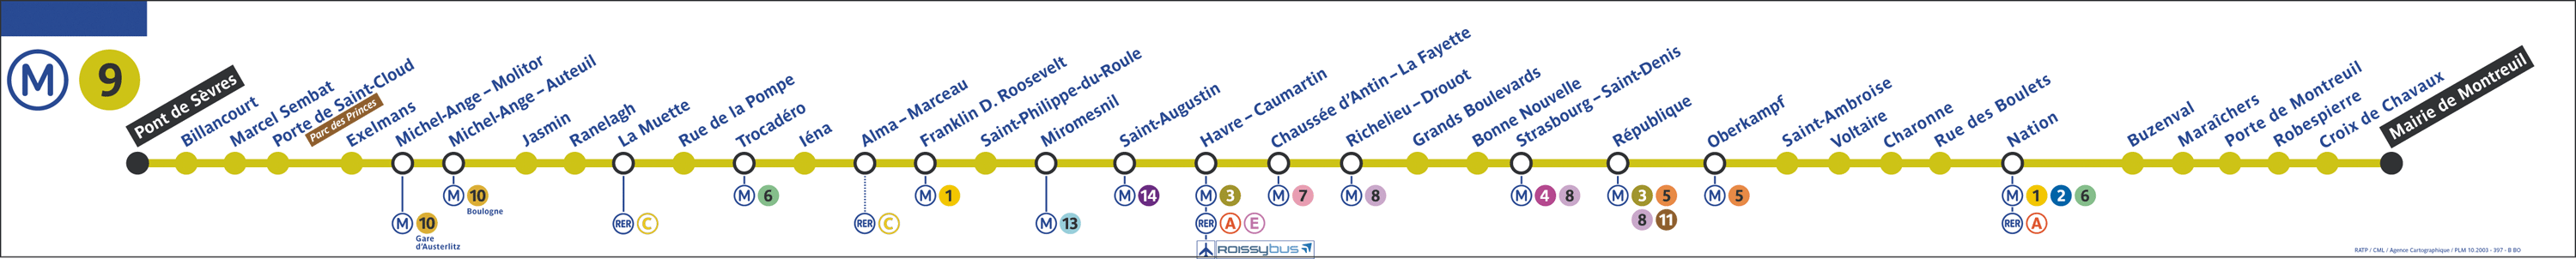 Métro Paris - ligne 9